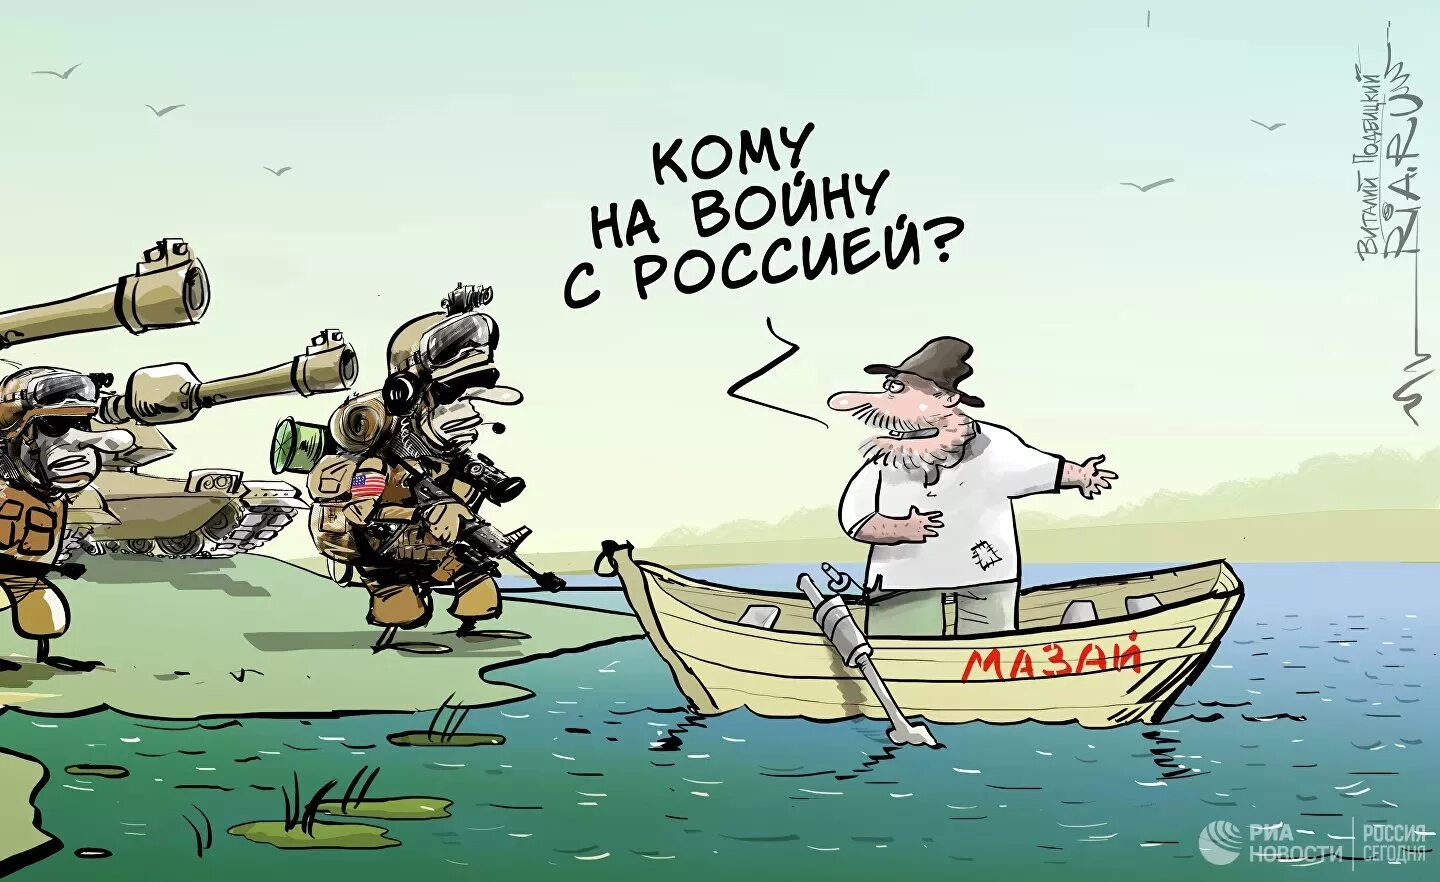 НАТО карикатура. Россия НАТО карикатура. Карикатура украинская НАТО И Украина. Европейские карикатуры.